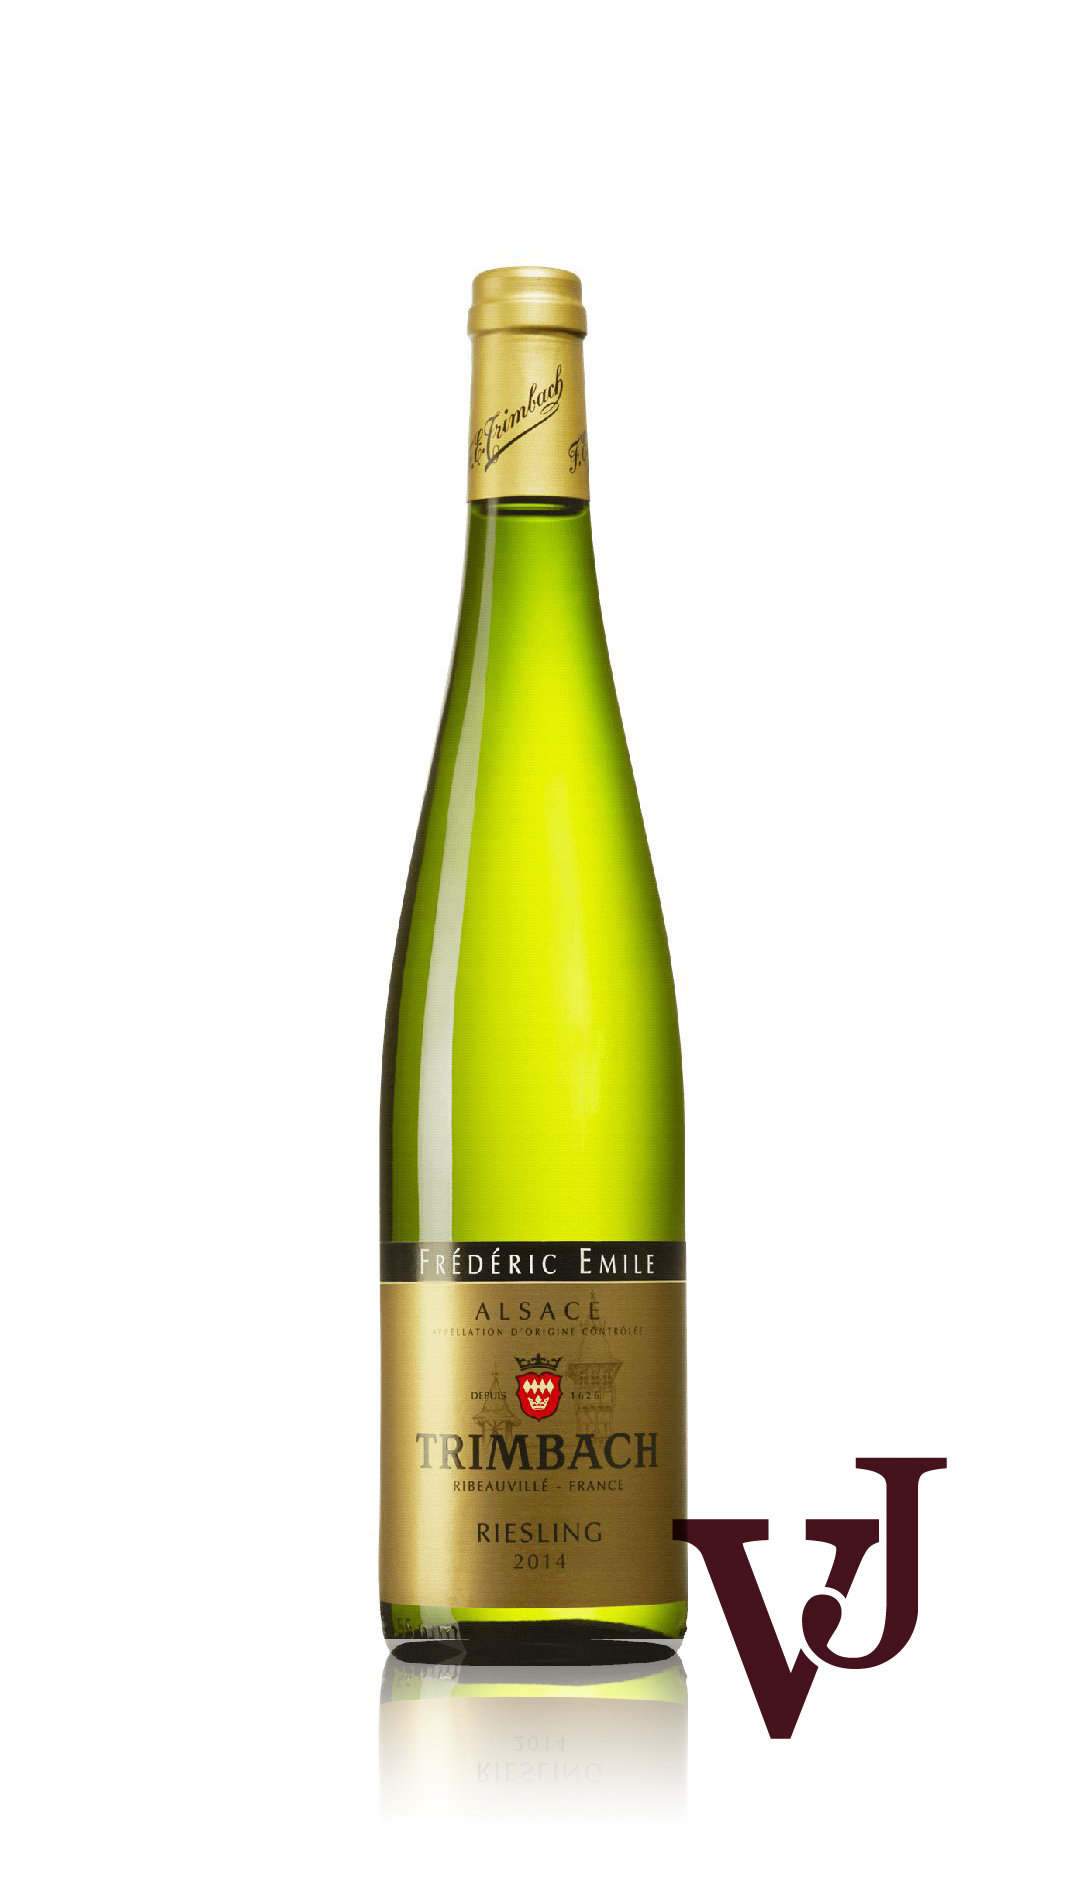 Vitt Vin - Trimbach Riesling Cuvée Frédéric Emile artikel nummer 9570801 från producenten Trimbach från området Frankrike